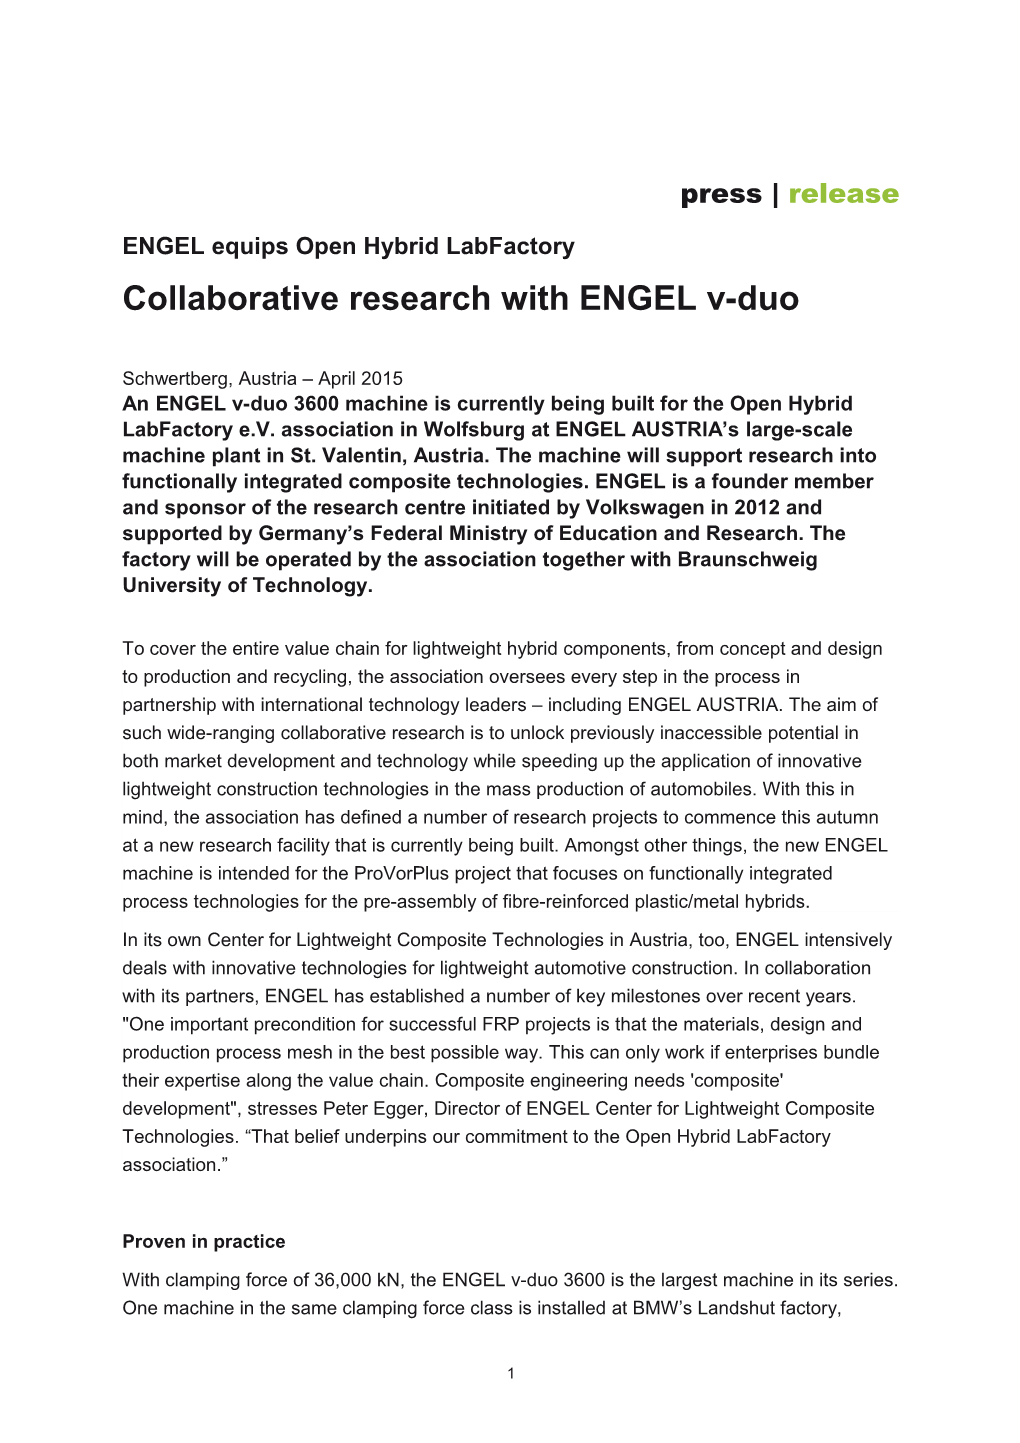 ENGEL Equips Open Hybrid Labfactory